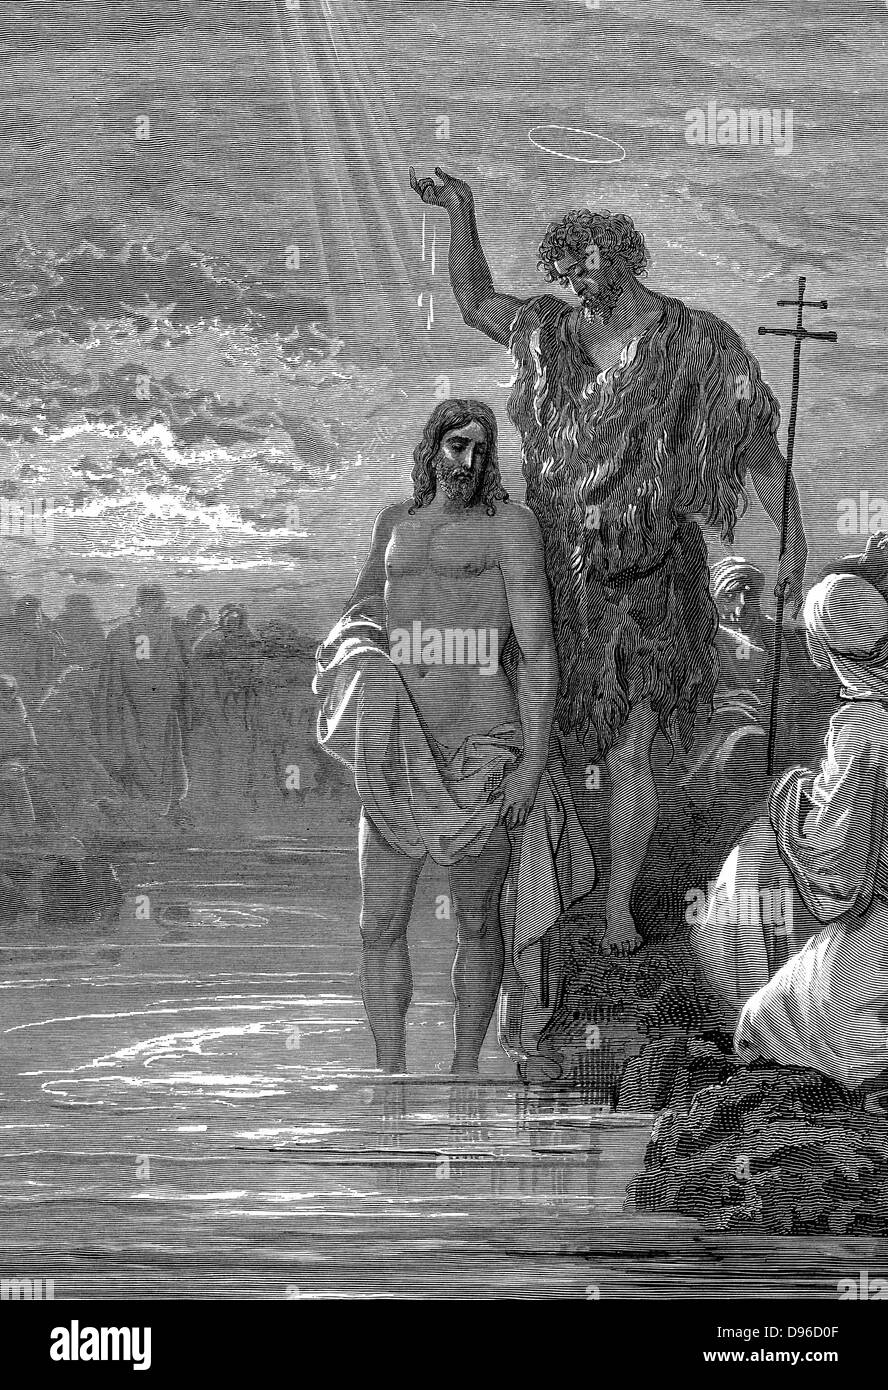 John the Baptist, wearing an animal skin, baptising Jesus. Bible: Matthew III.15. Illustration by Gustave Dore, 1865-1856. Wood engraving. Stock Photo